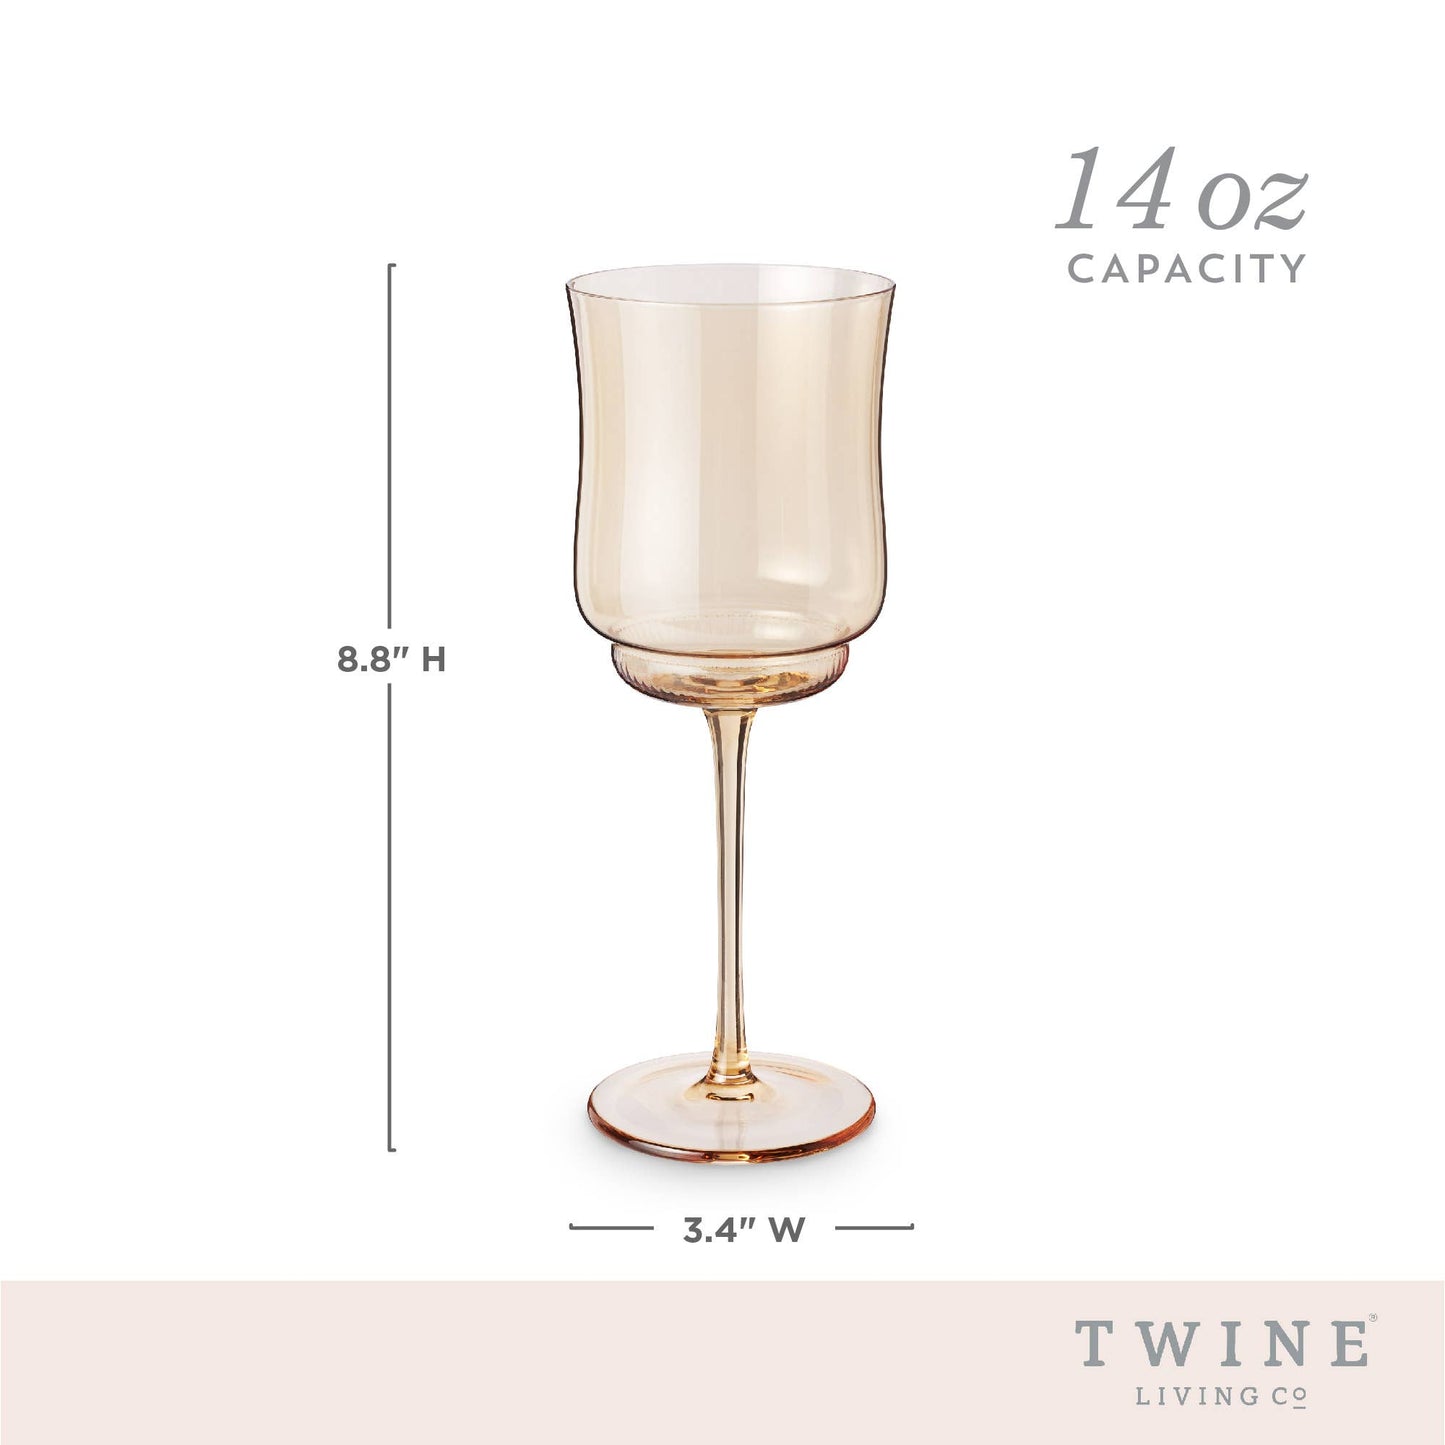 Tulip Amber-Tinted Glass Stemmed Wine Glasses - Set of 2